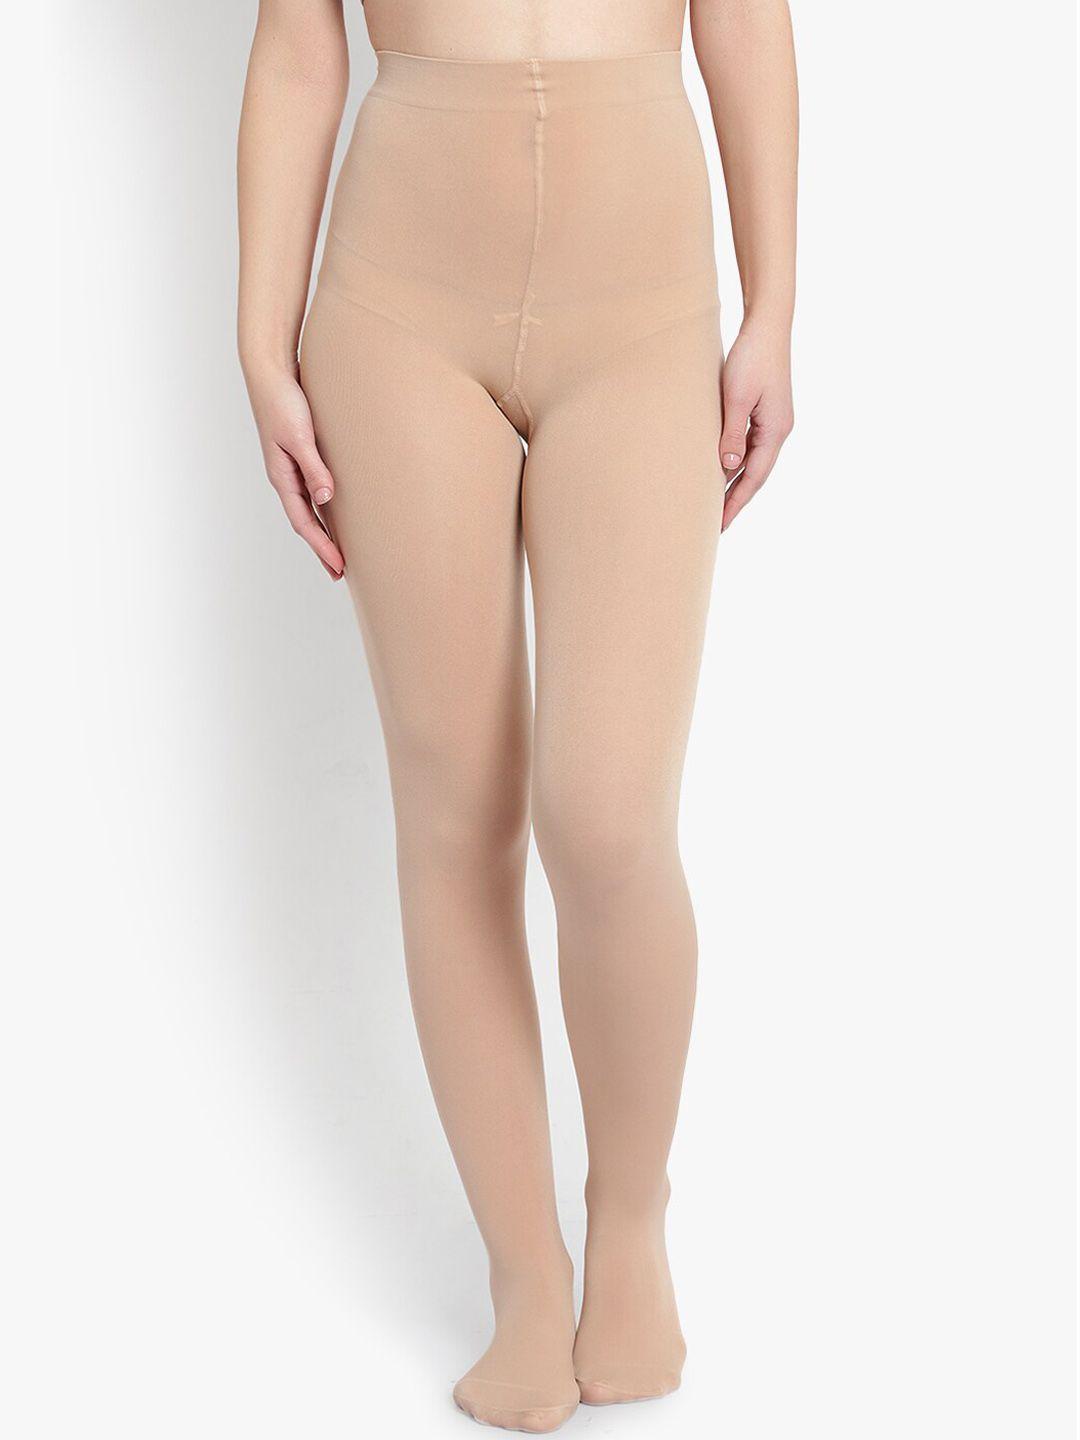 brachy women beige solid pantyhose stockings